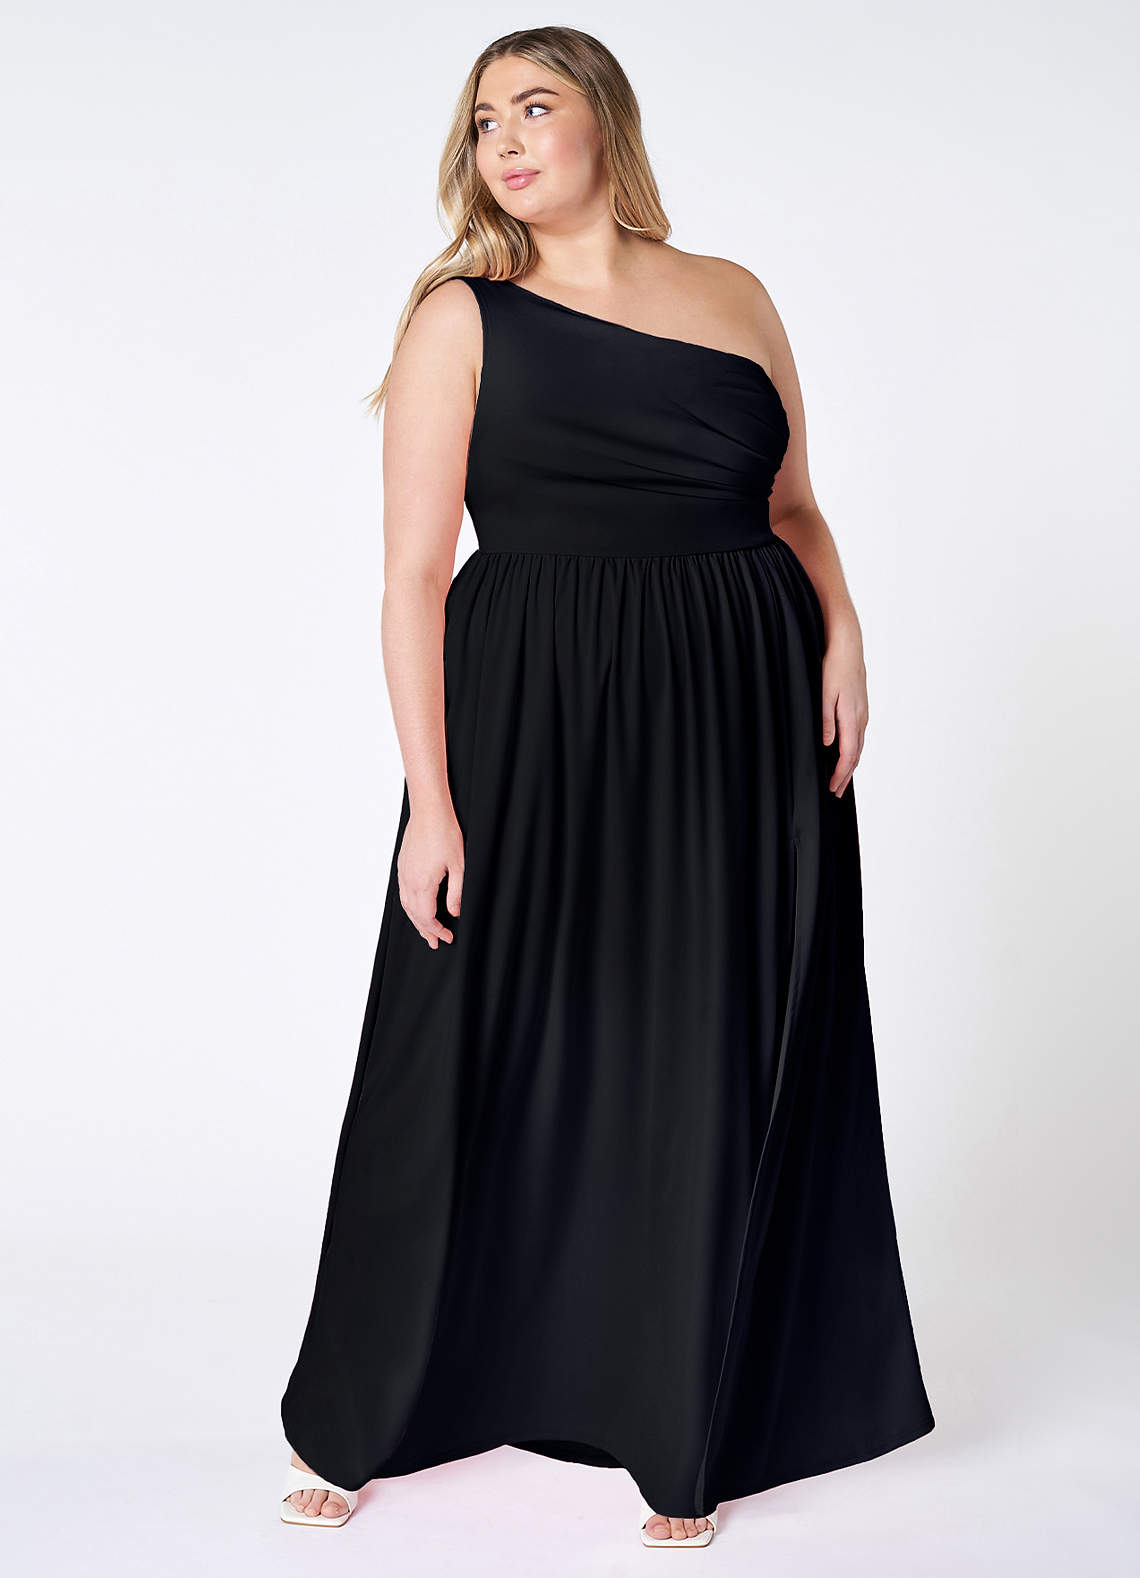 On The Guest List Black One-Shoulder Maxi Dress image1